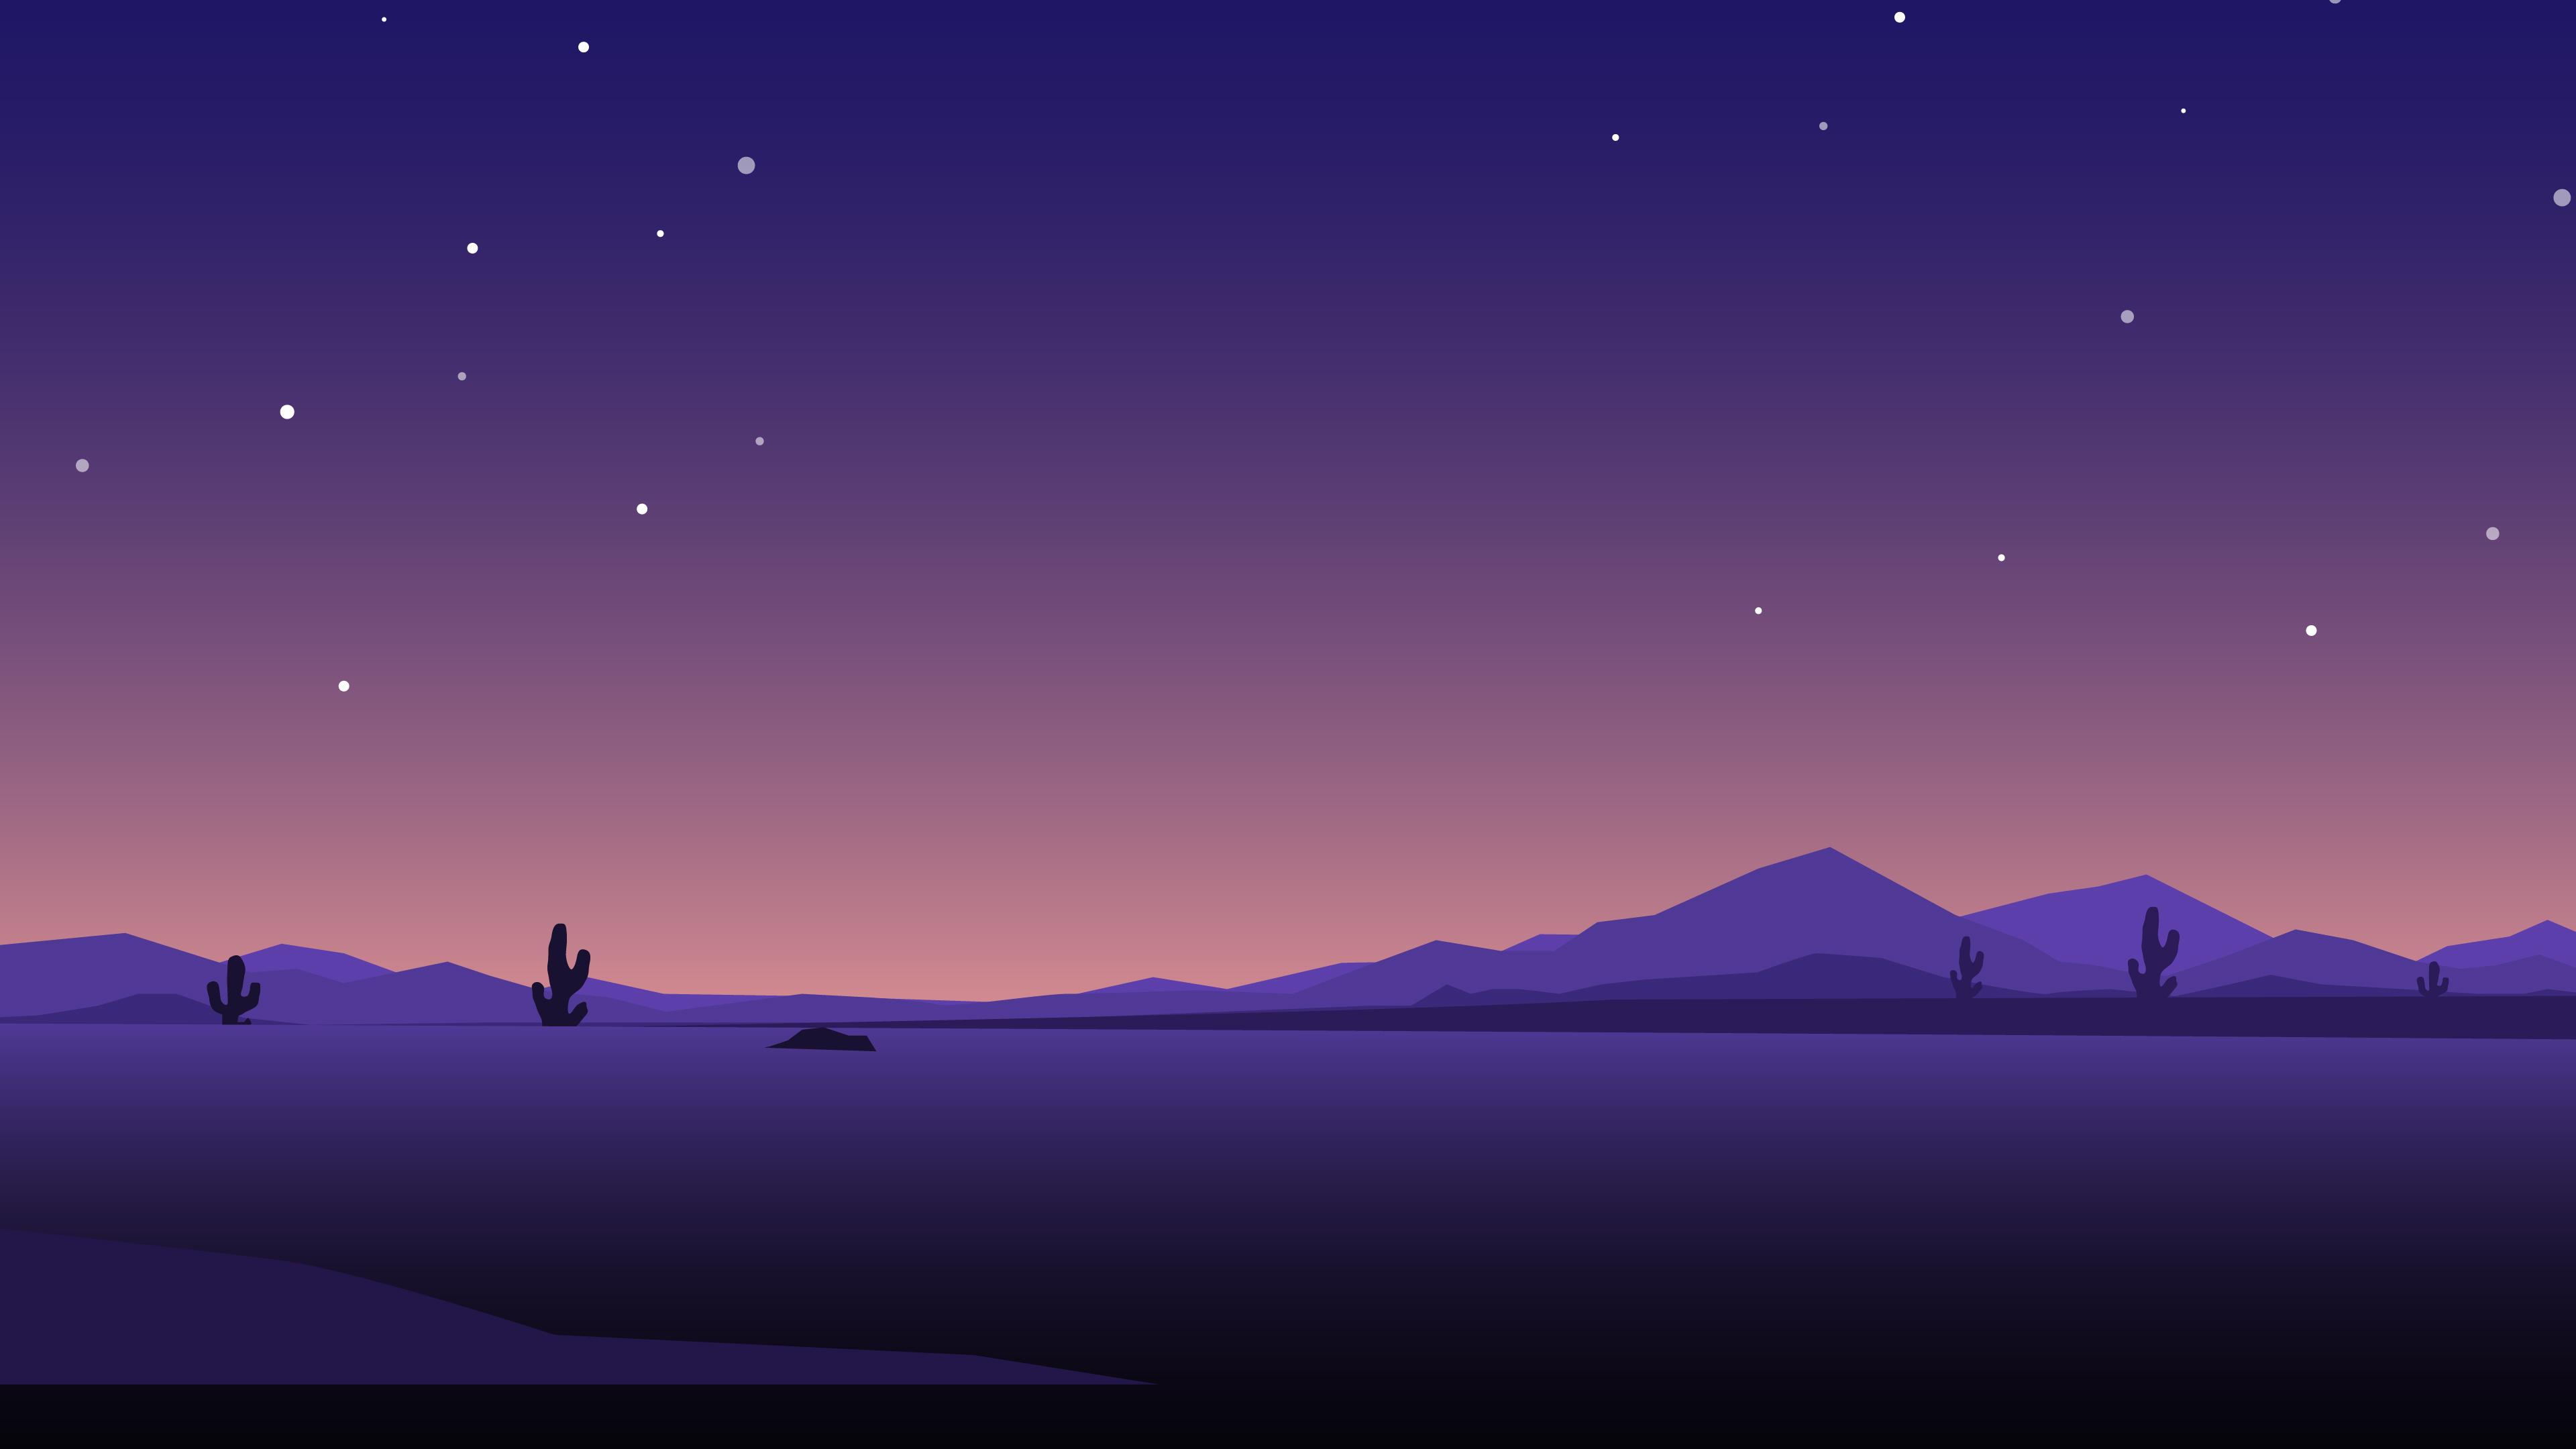 Desert Night Desktop Wallpapers - Top Free Desert Night Desktop